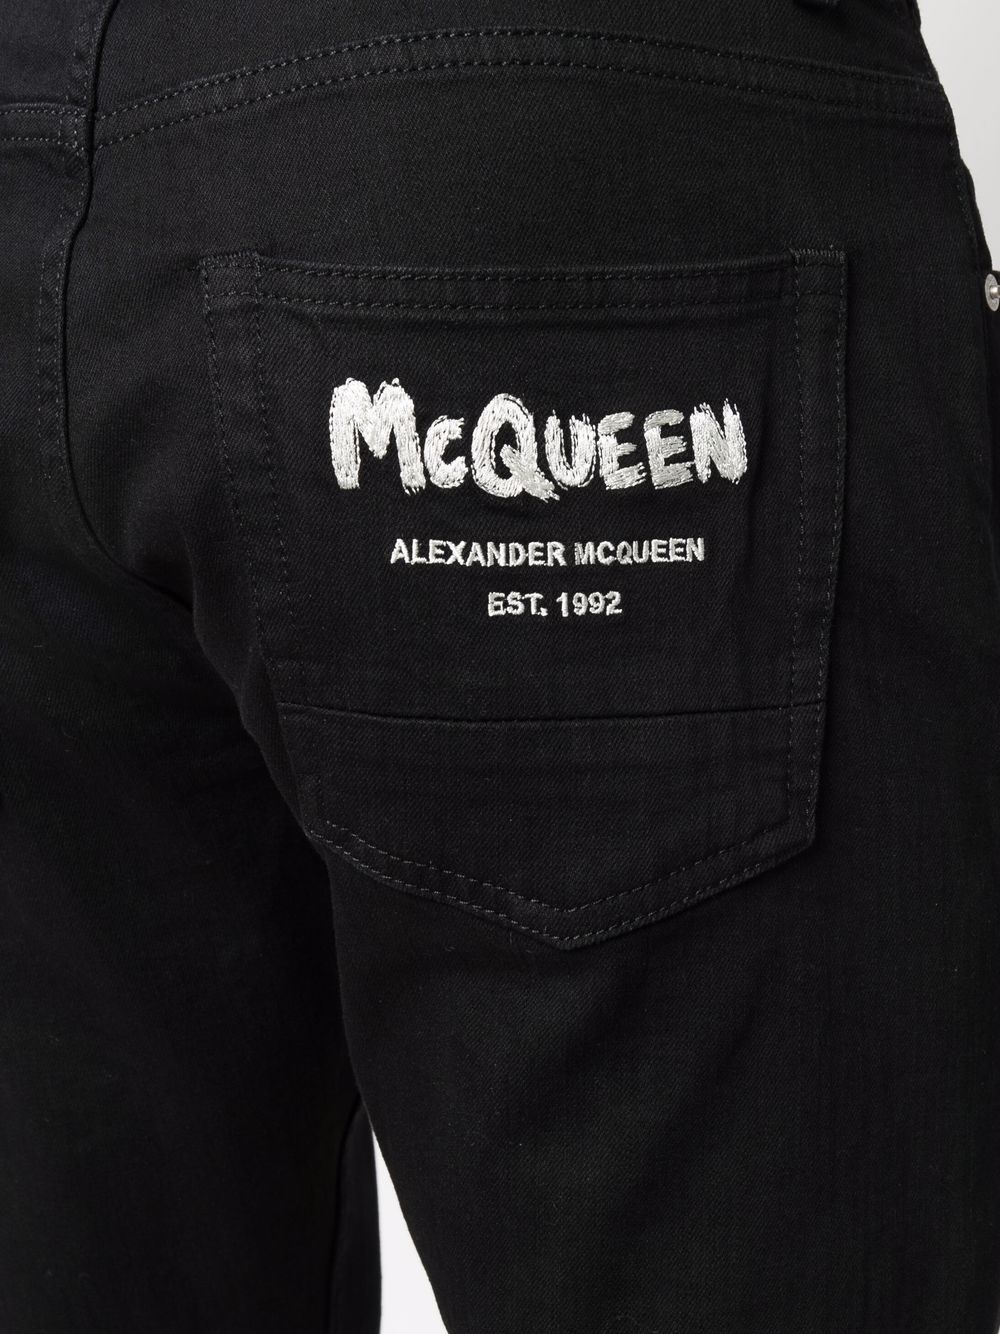 ALEXANDER MCQUEEN Graffiti Embroidered Jeans Black - MAISONDEFASHION.COM